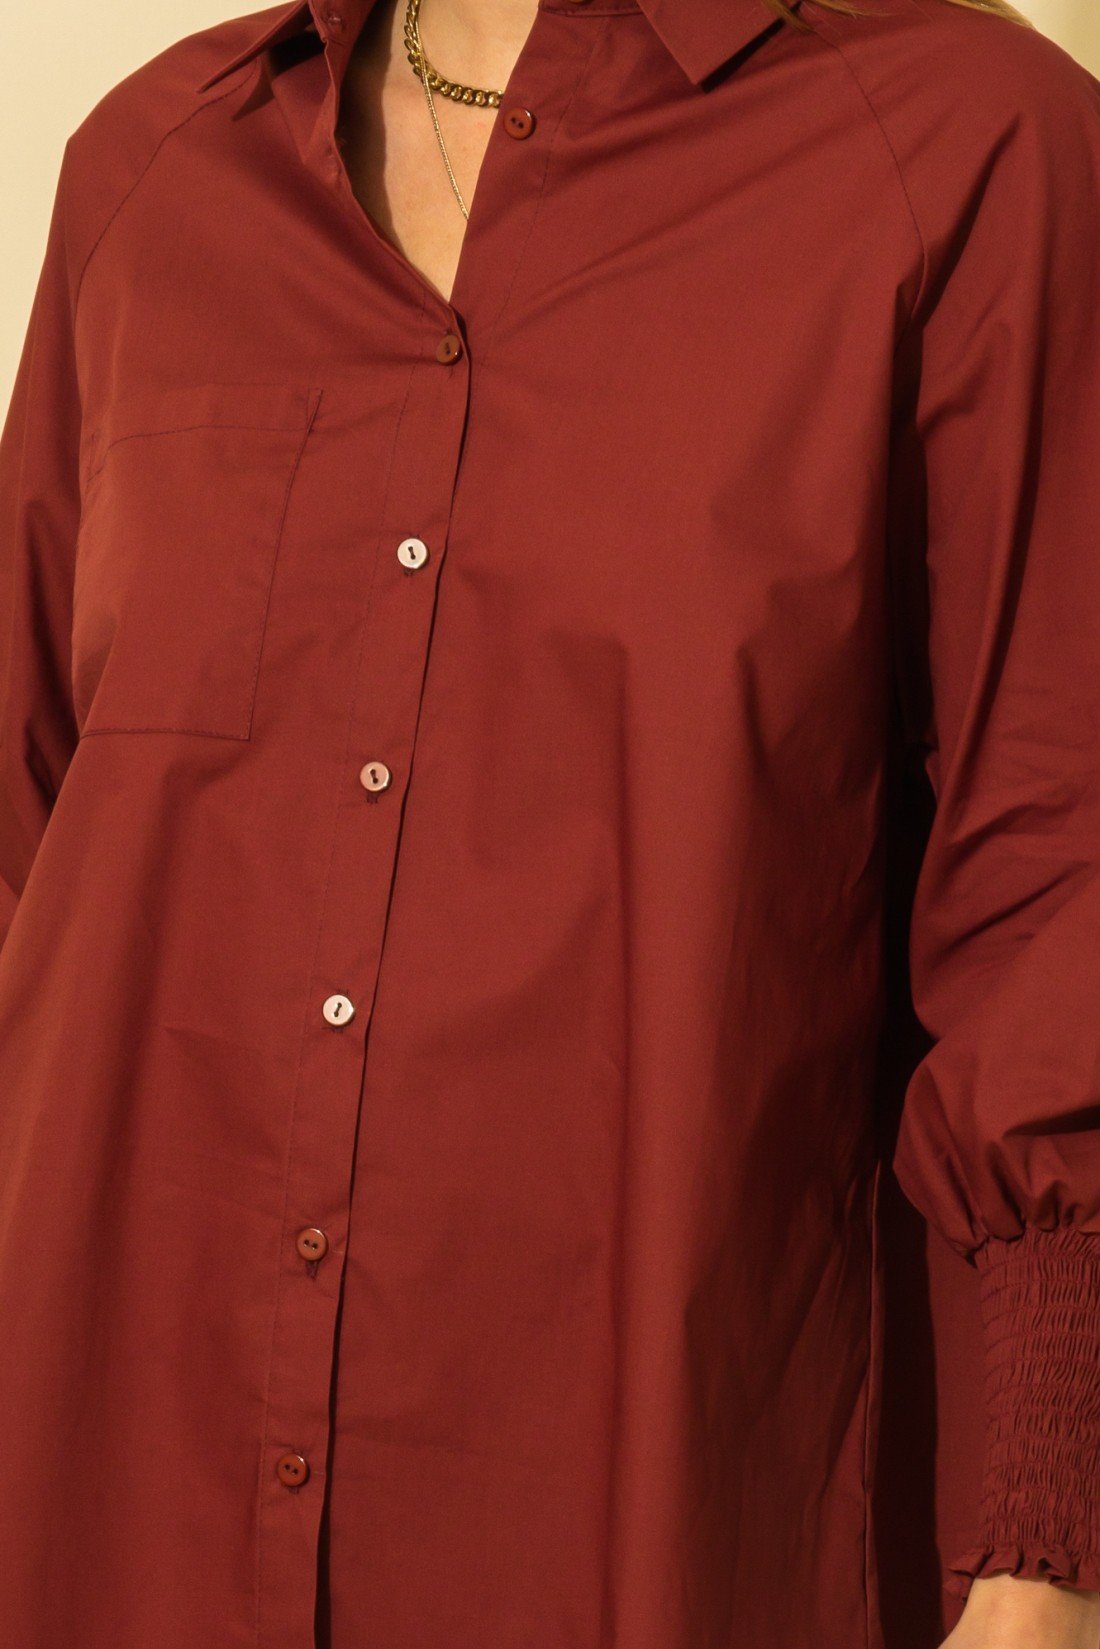 Bexley Raglan Sleeve Smocked Cuff Shirt in Beige and Burgundy